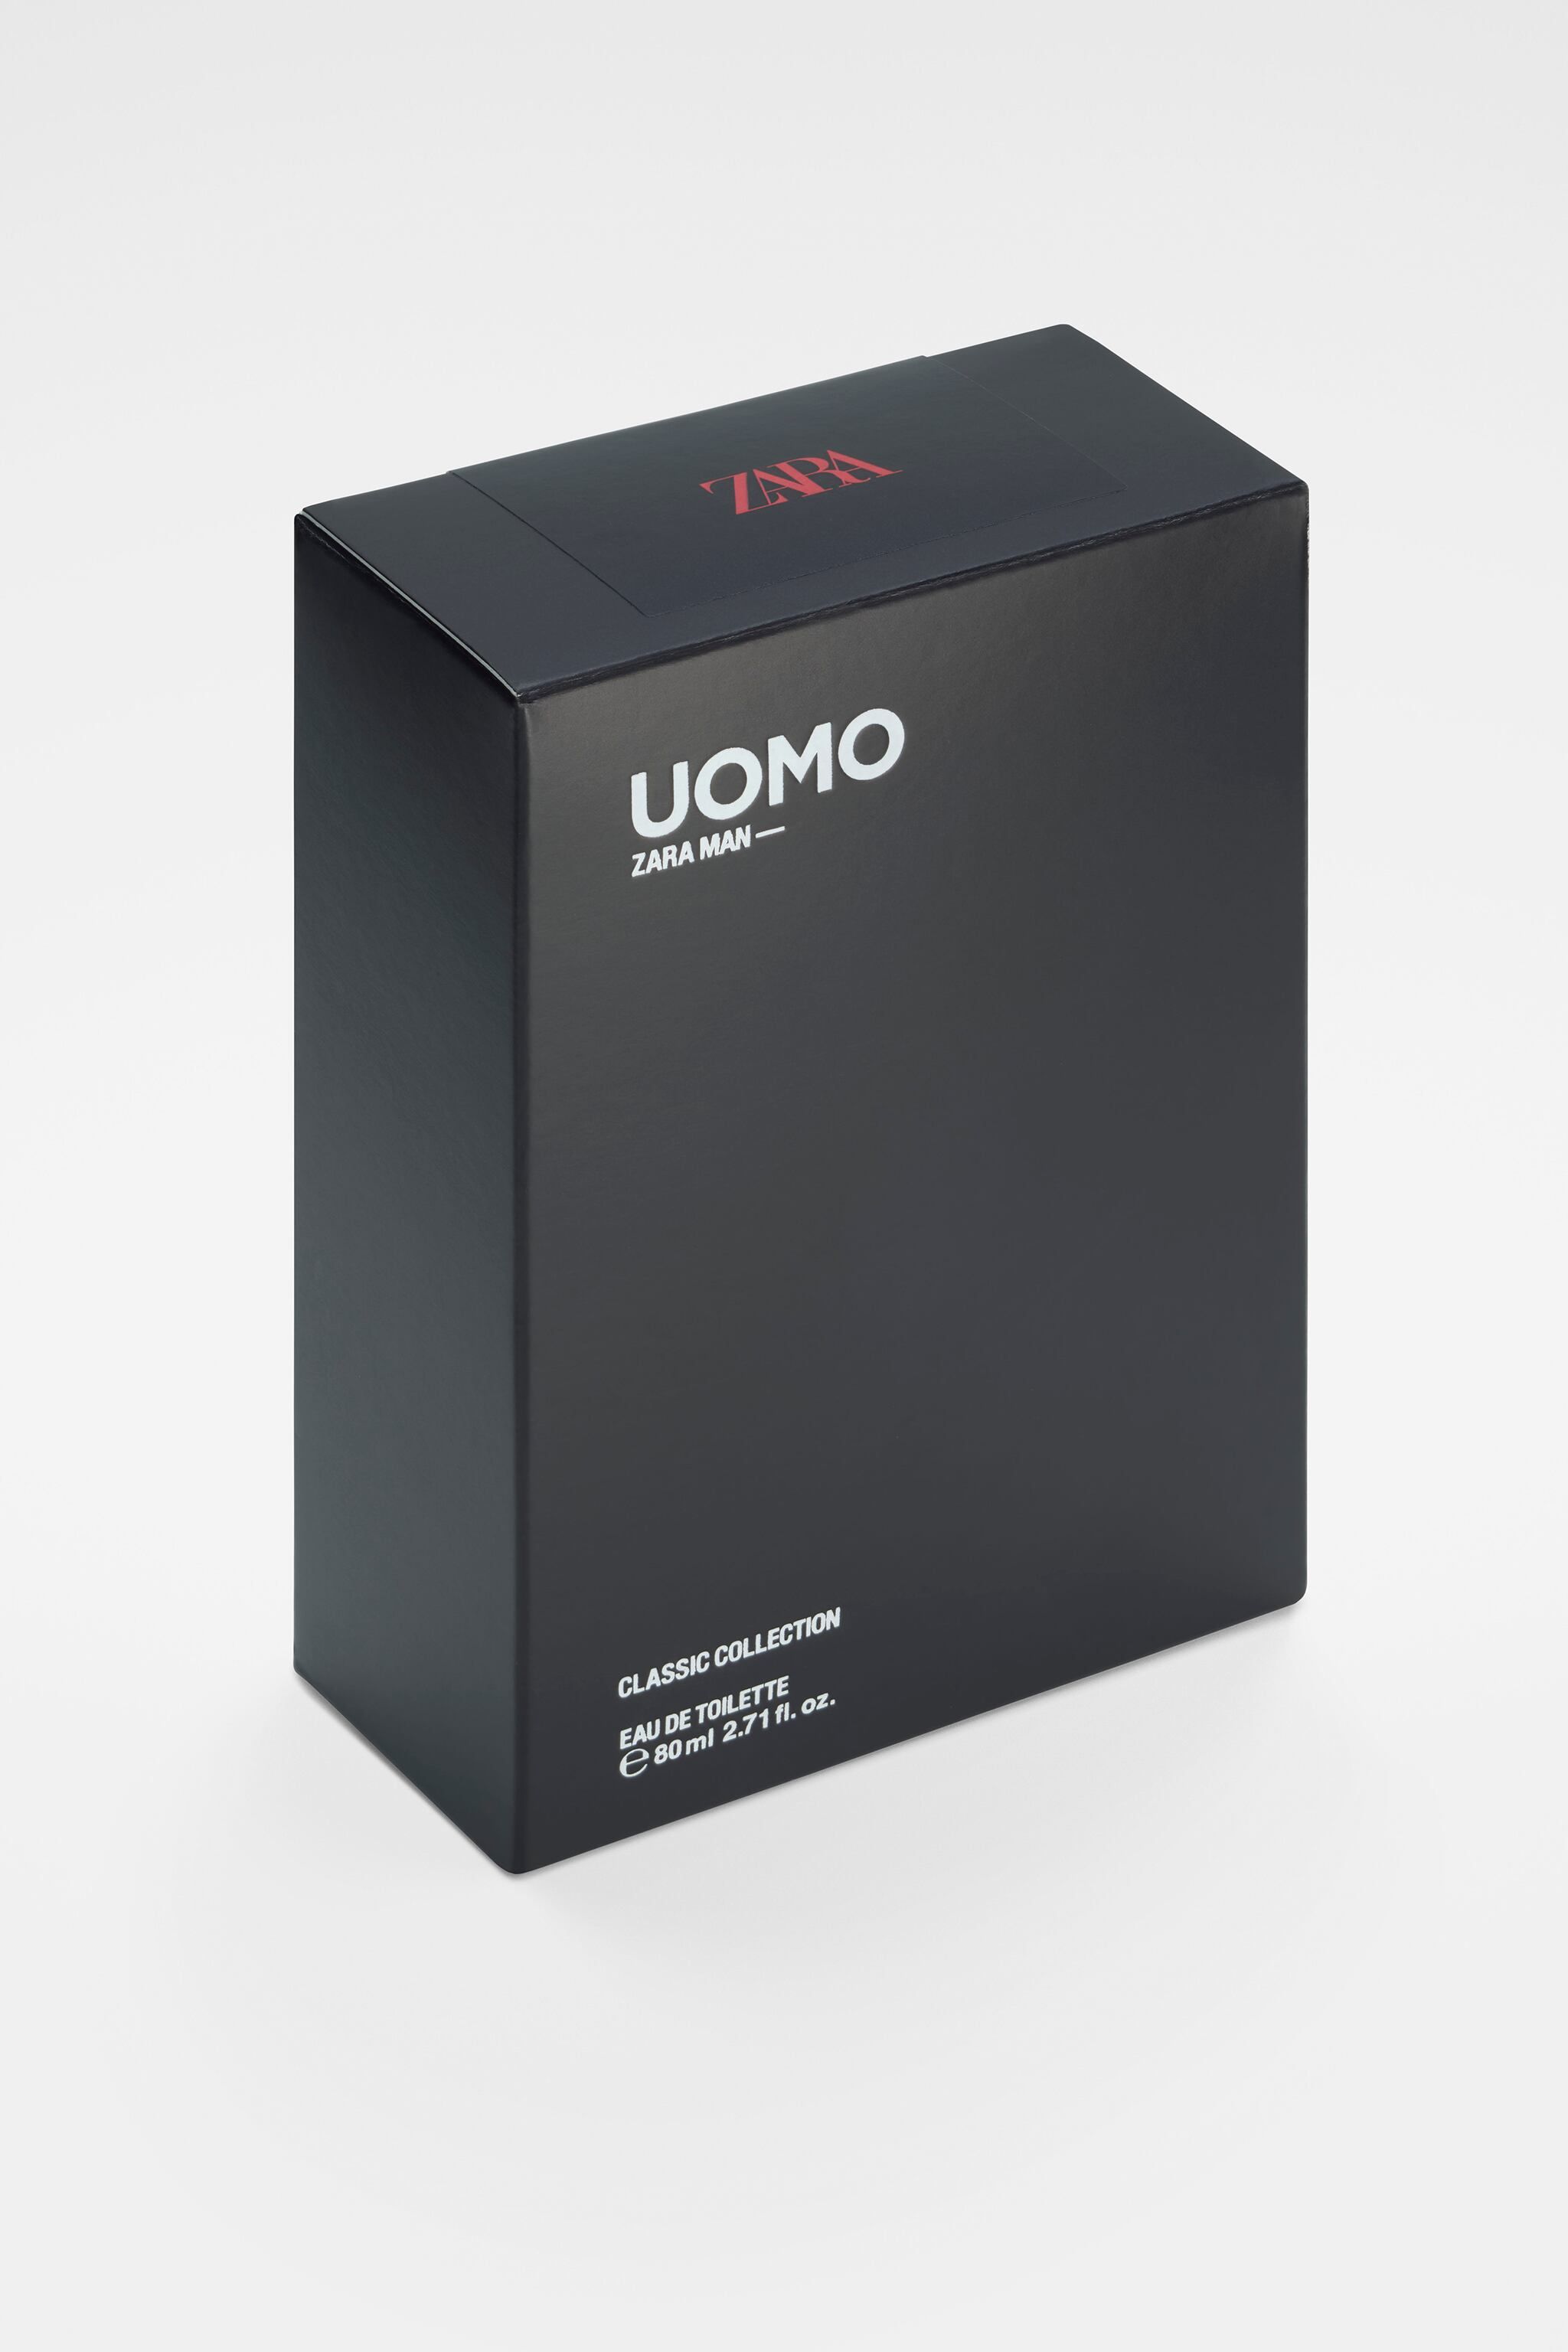 Uomo Zara cologne - a fragrance for men 2021